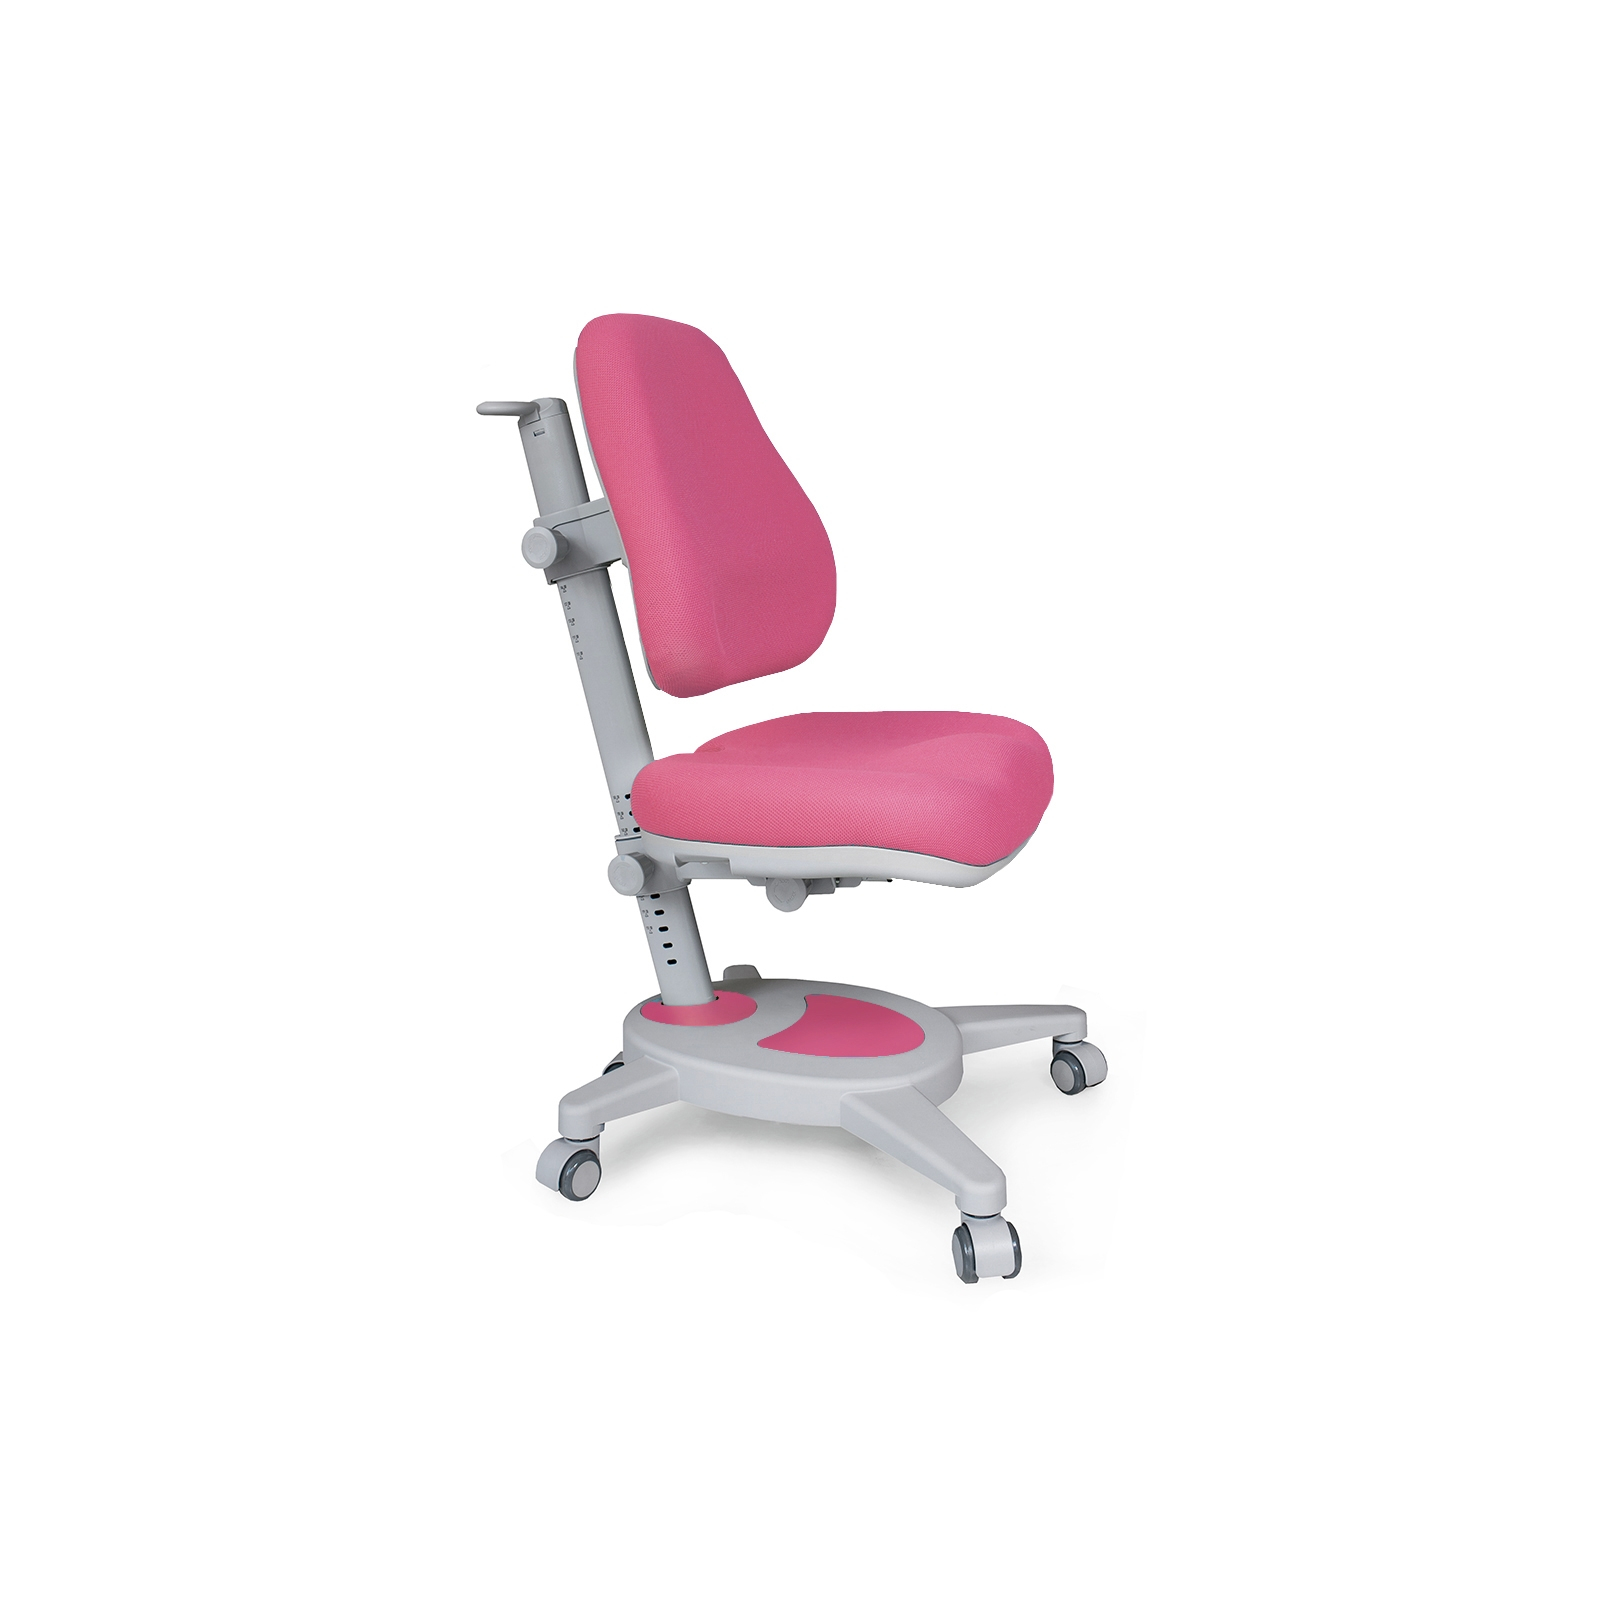 Дитяче крісло Mealux Onyx G (Y-110 G)